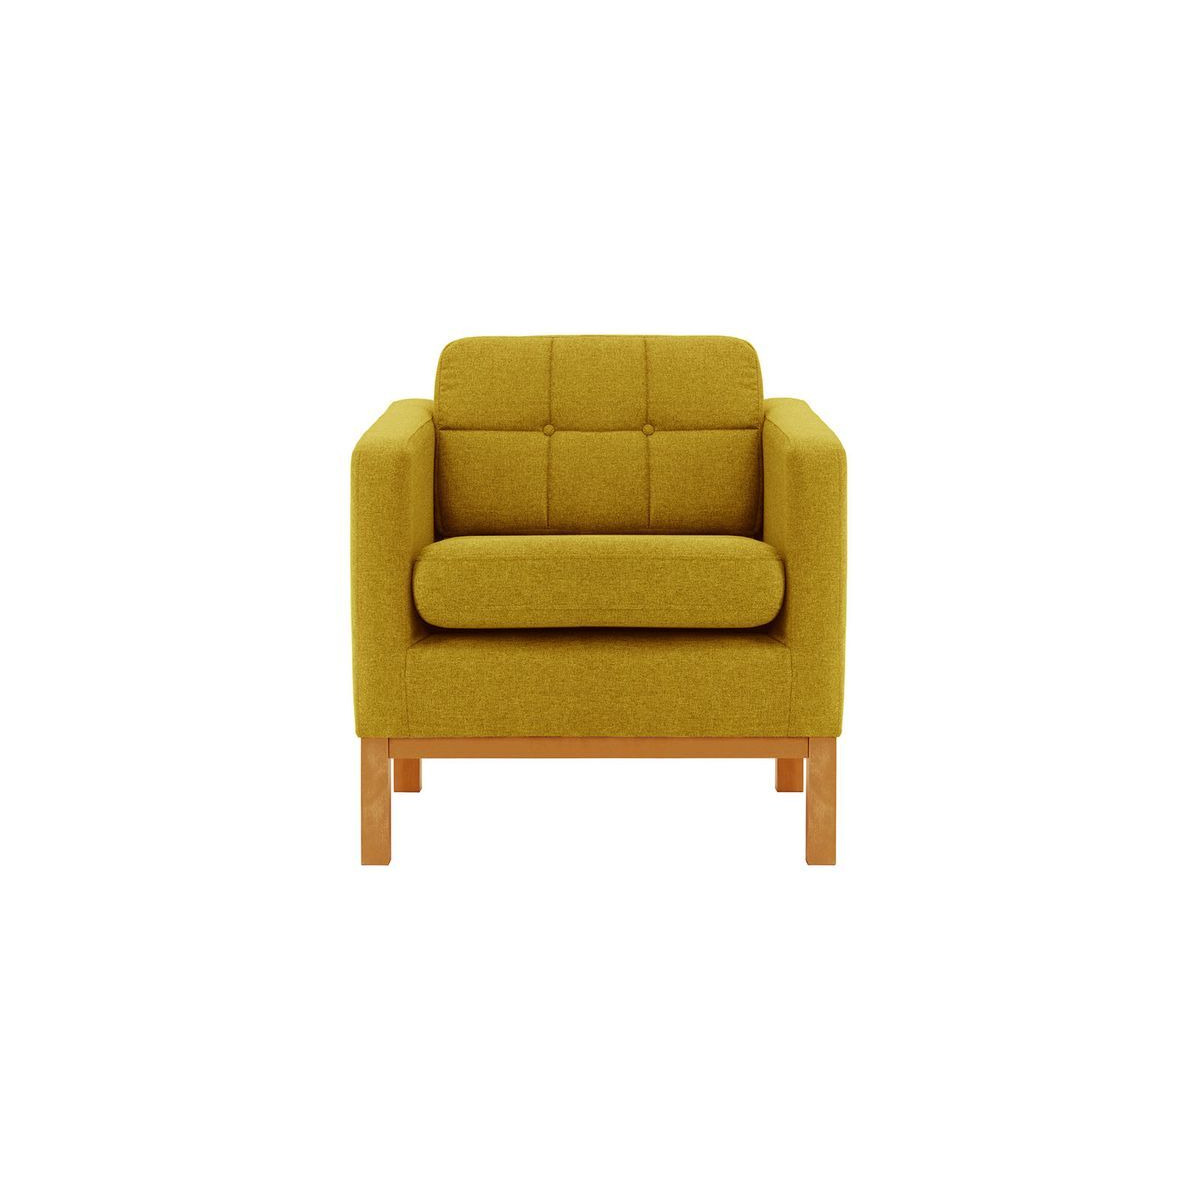 Normann Armchair, mustard, Leg colour: aveo - image 1